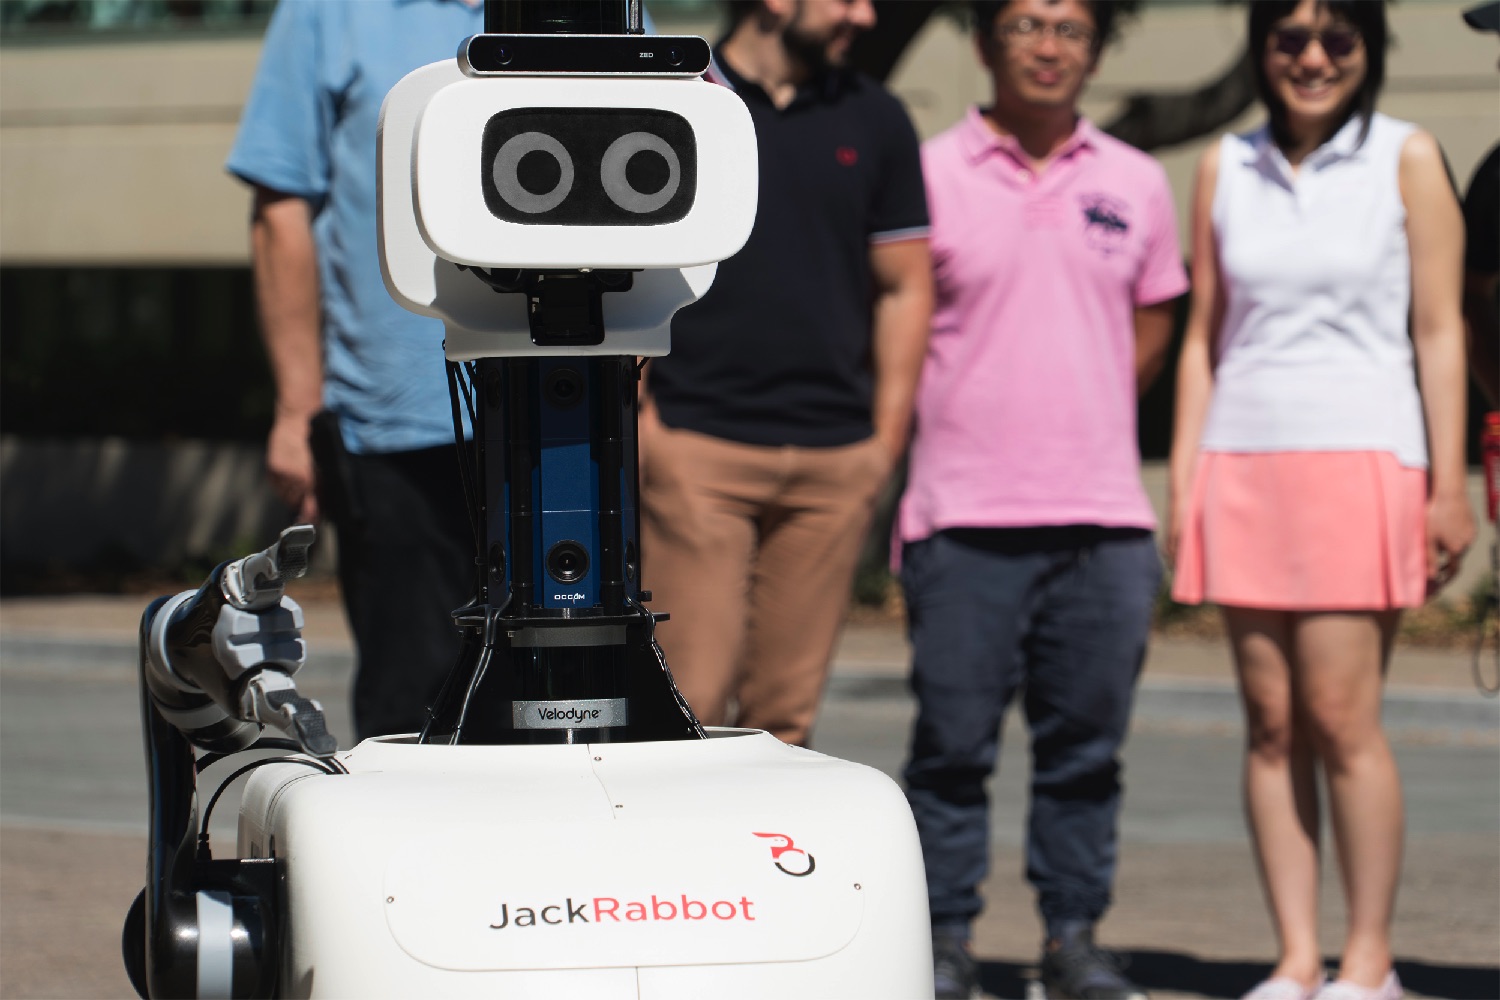 jackrabbot 2 robot stanford 3774 1